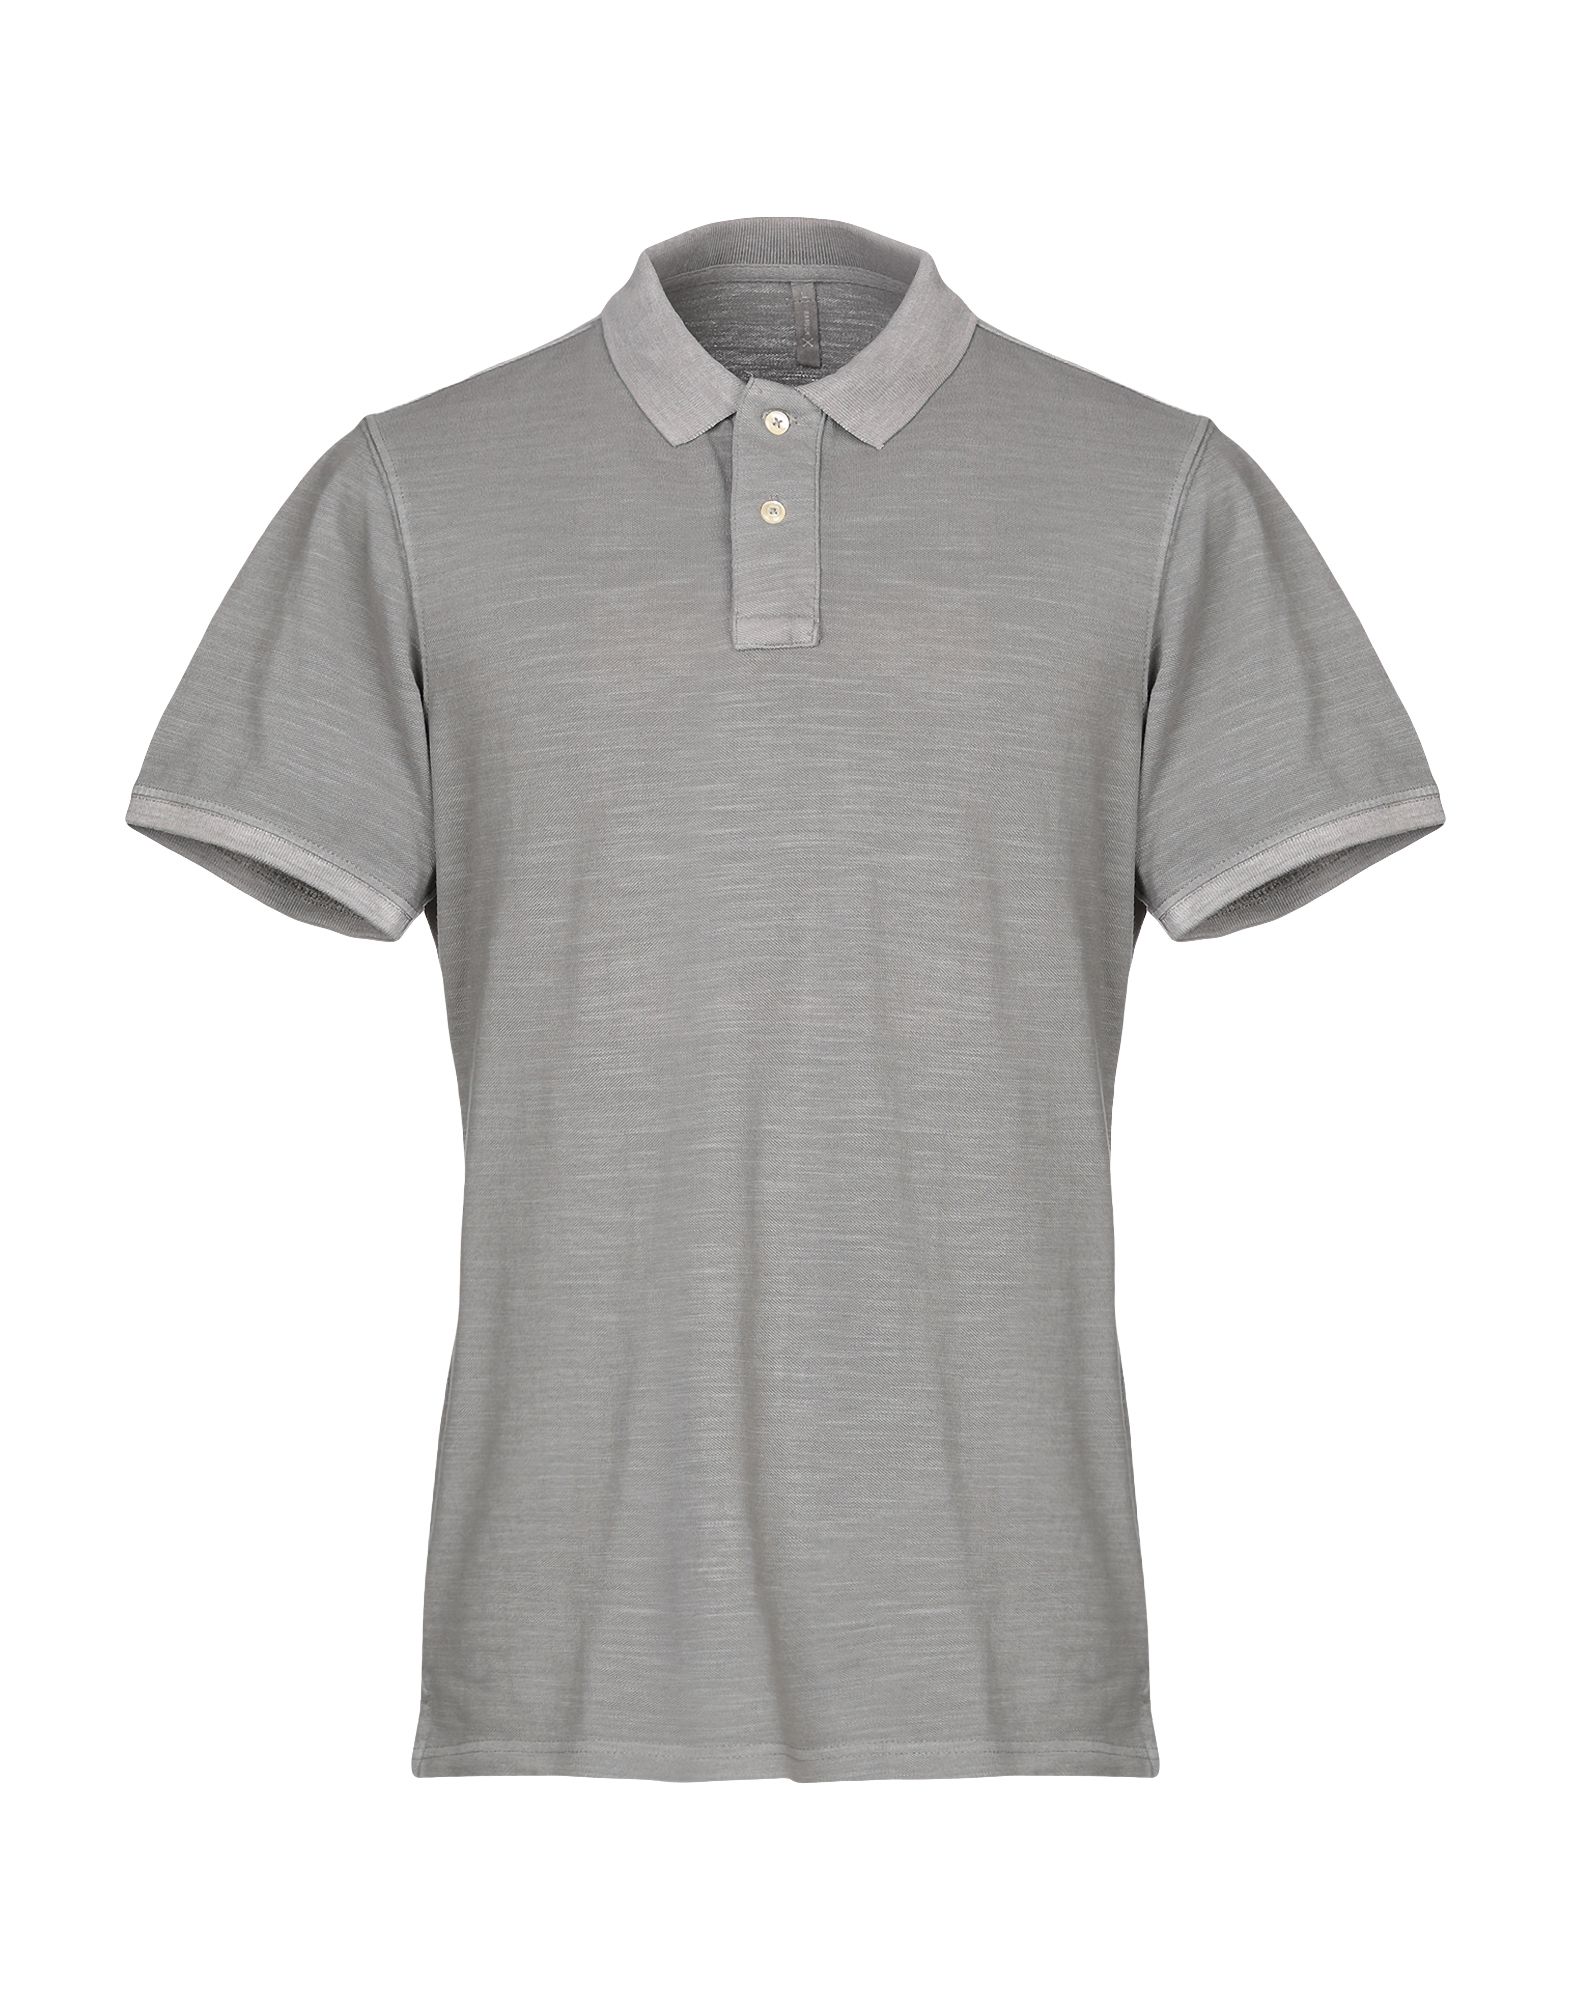 Ransom Polo Shirt In Light Grey